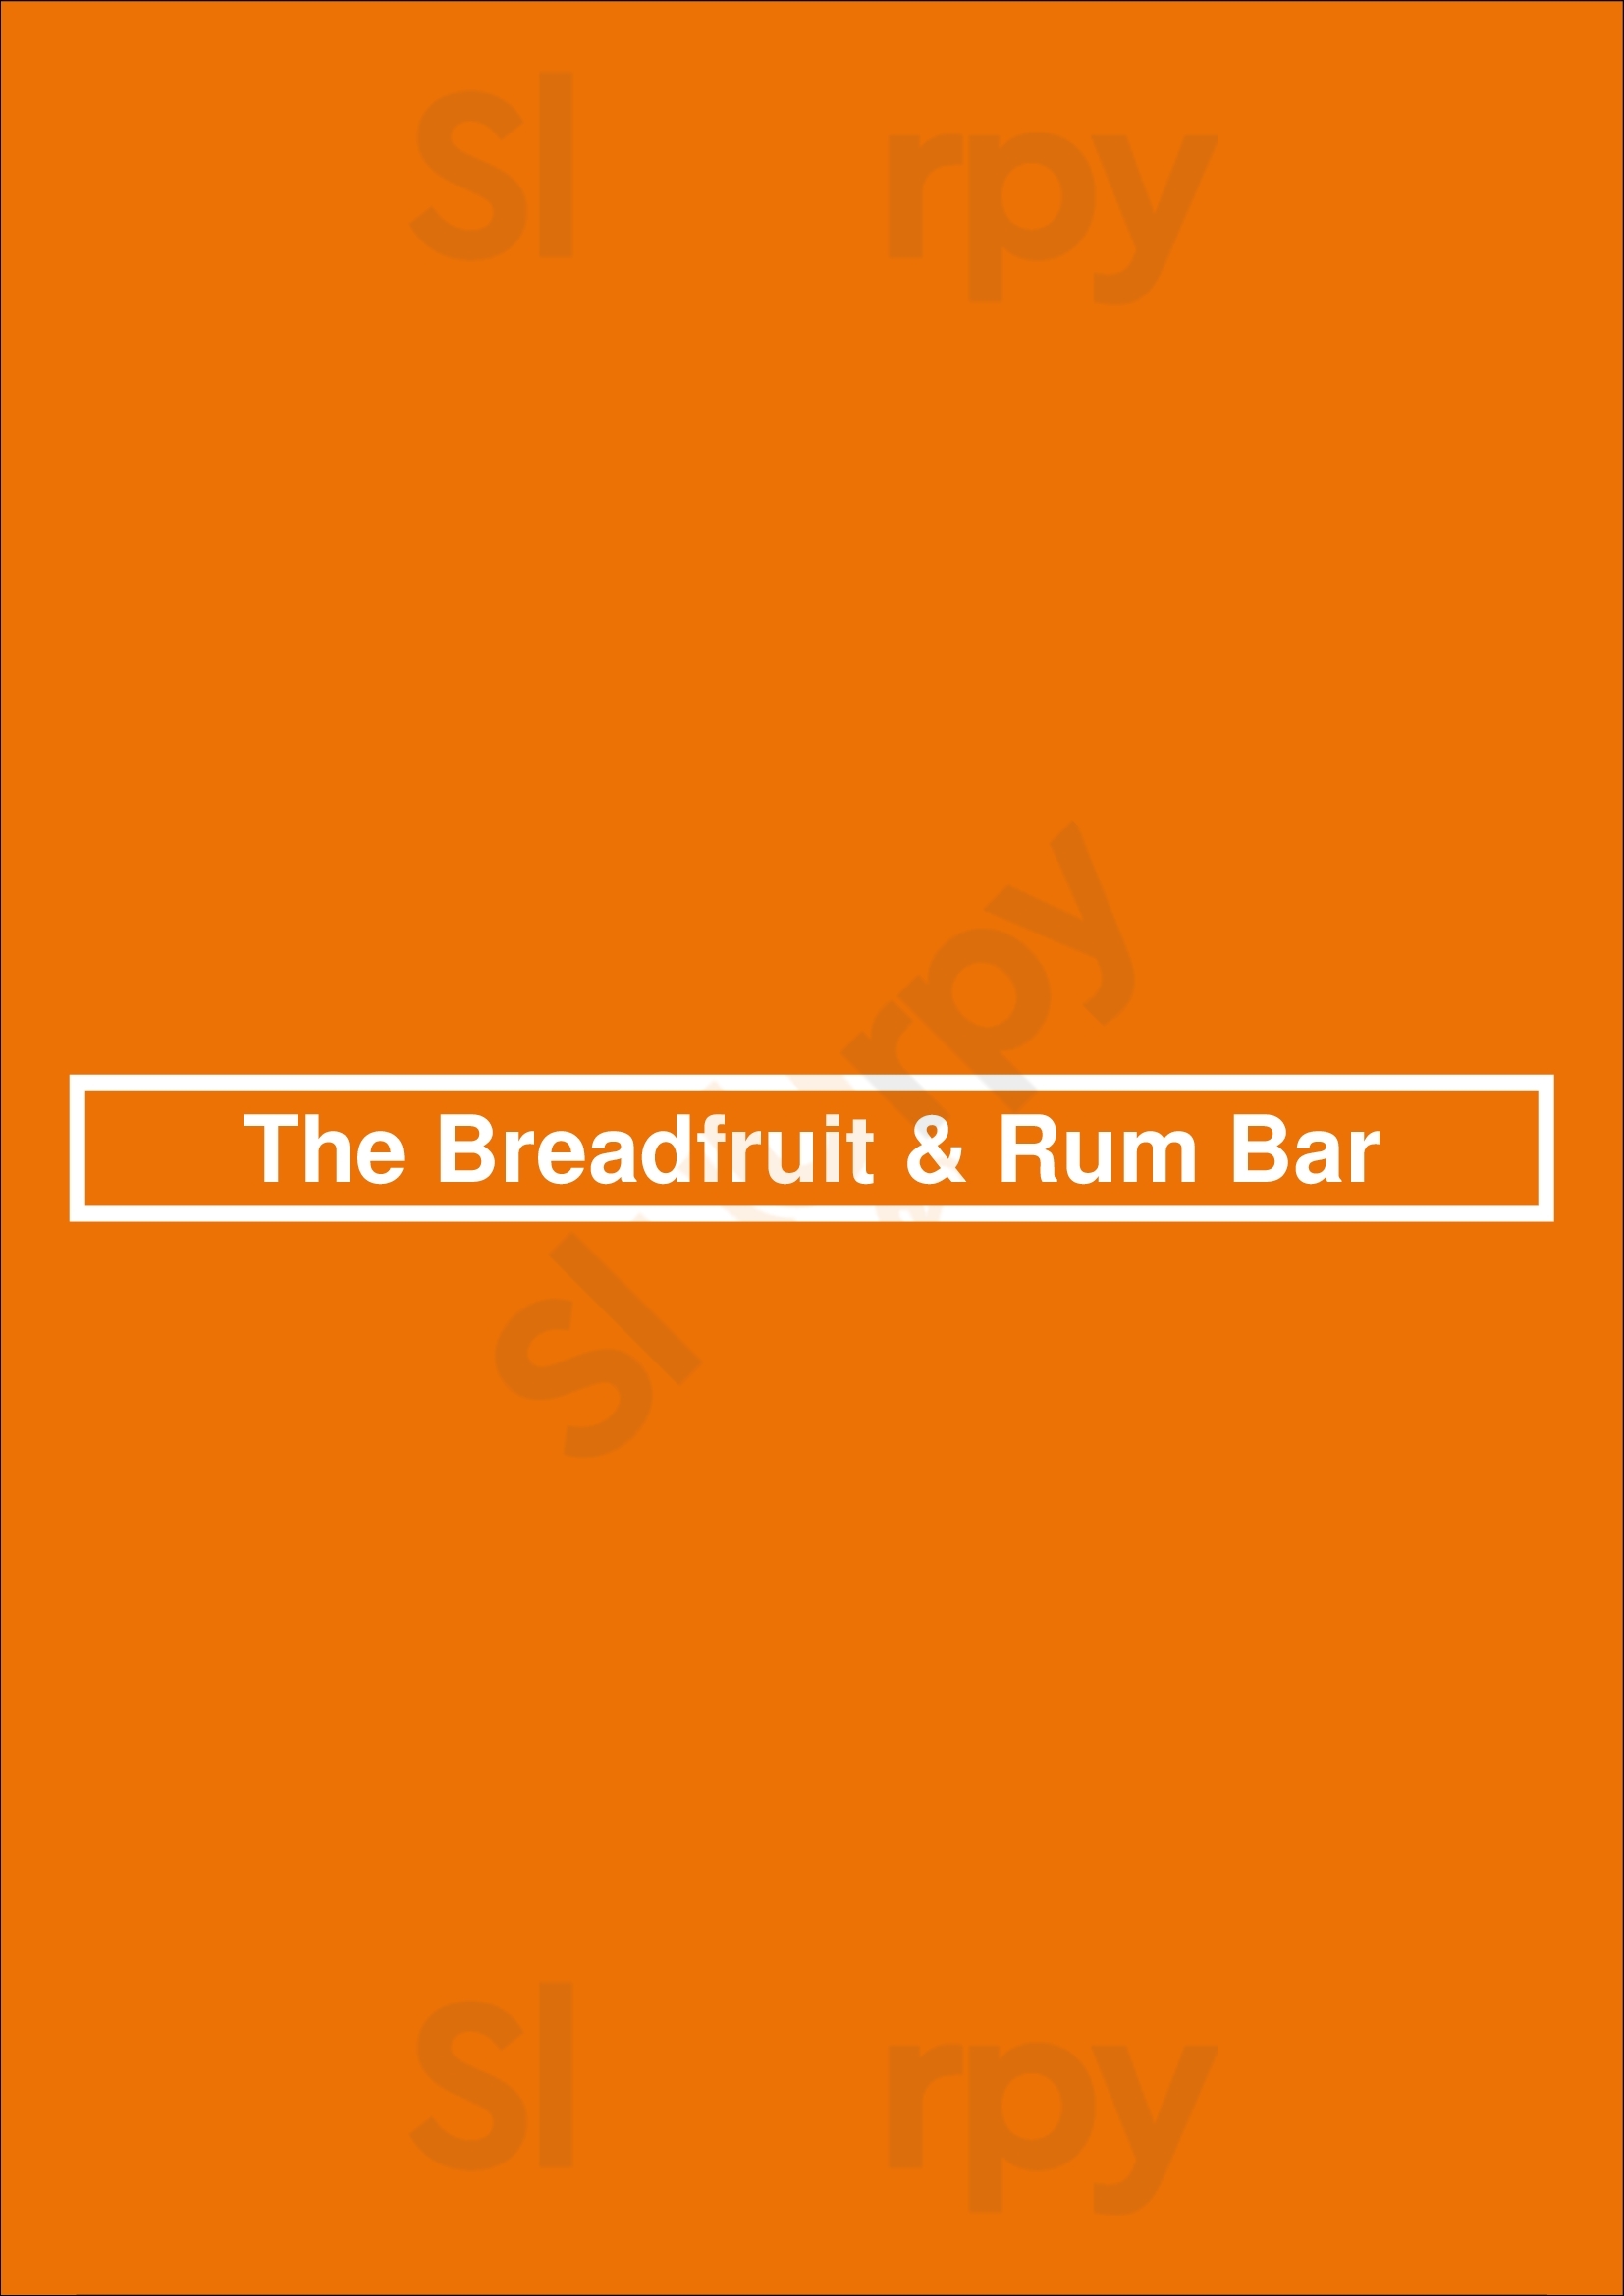 The Breadfruit & Rum Bar Phoenix Menu - 1